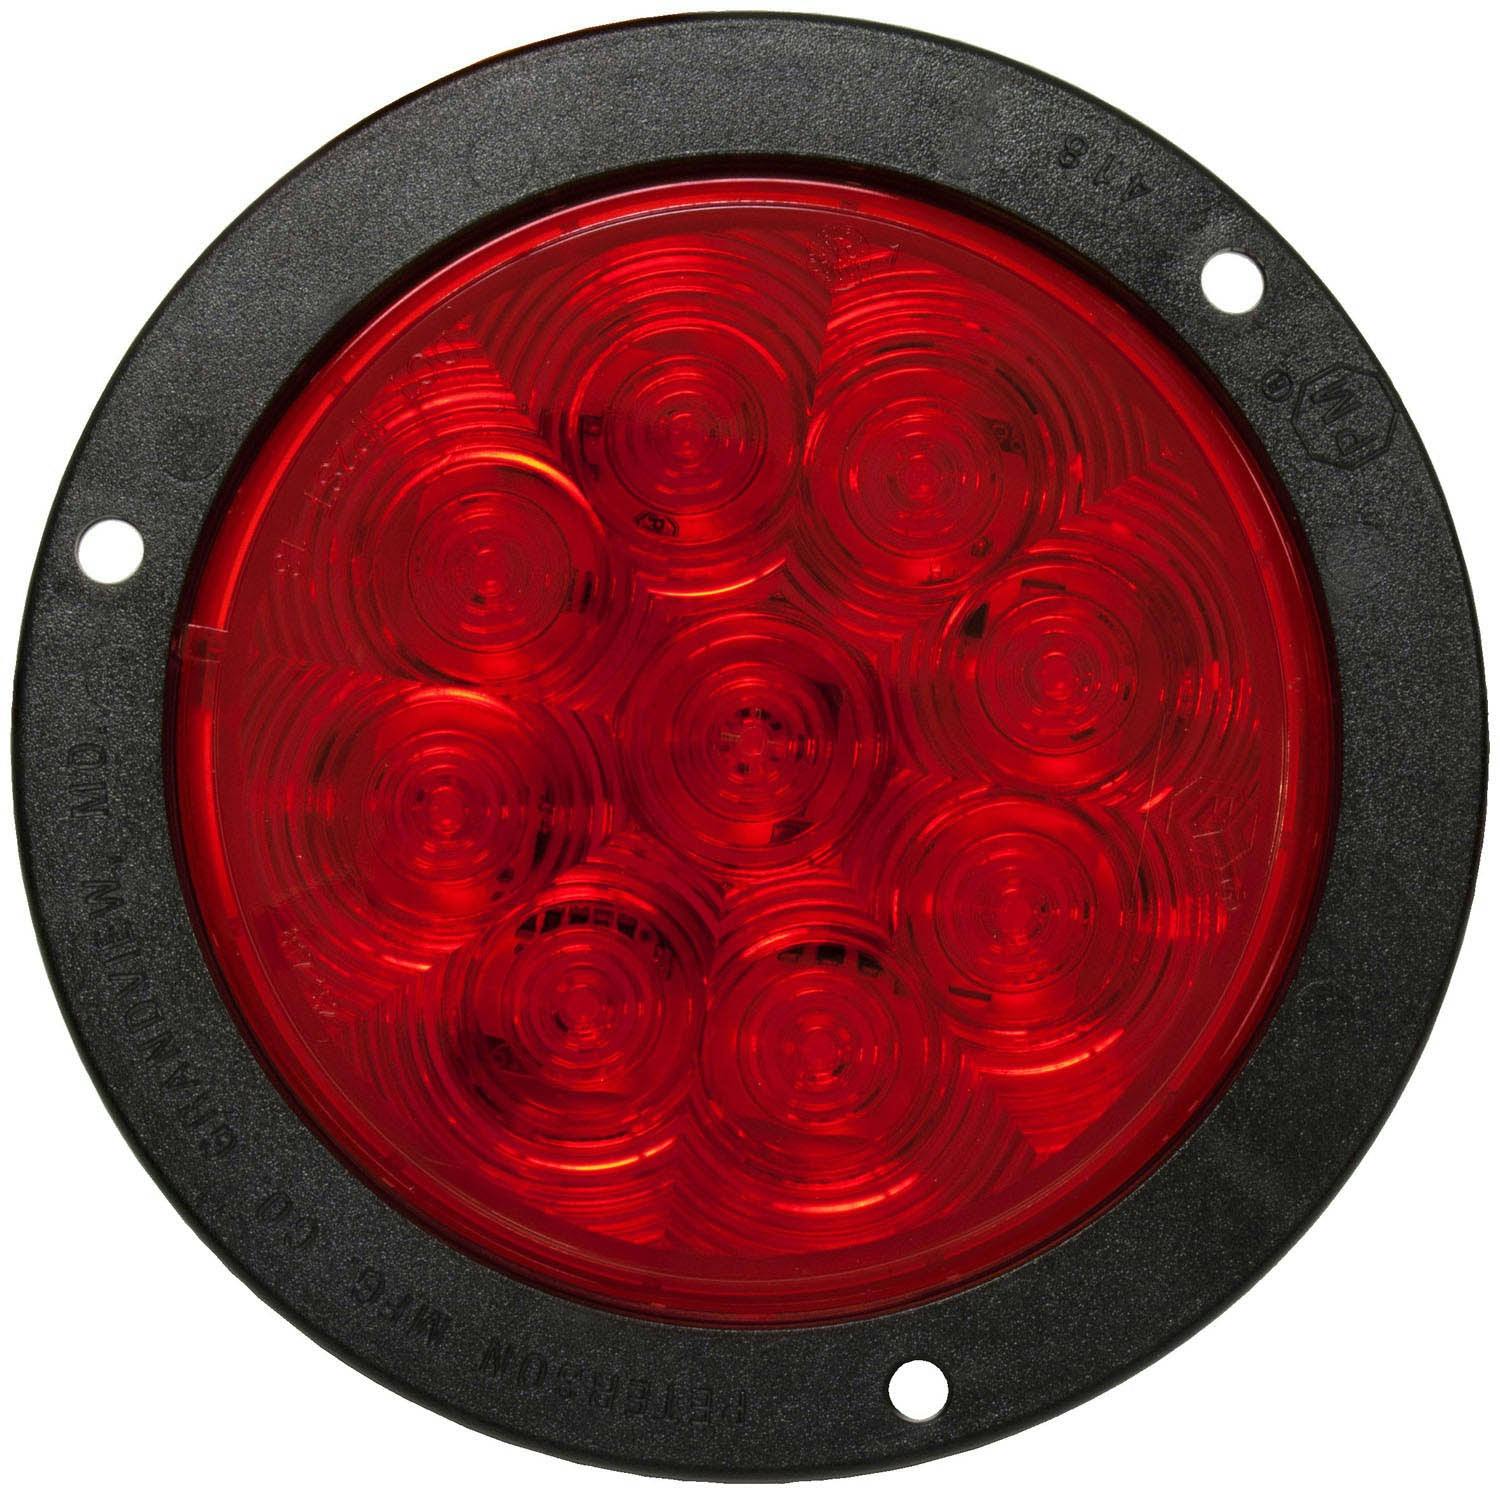 LED Stop/Turn/Tail, Round, AMP, Flange-Mount 4", Multi-volt, red, bulk pack (Pack of 50) - 818R-9_9e808df9-a3f6-4644-99e4-694f6cc31f29